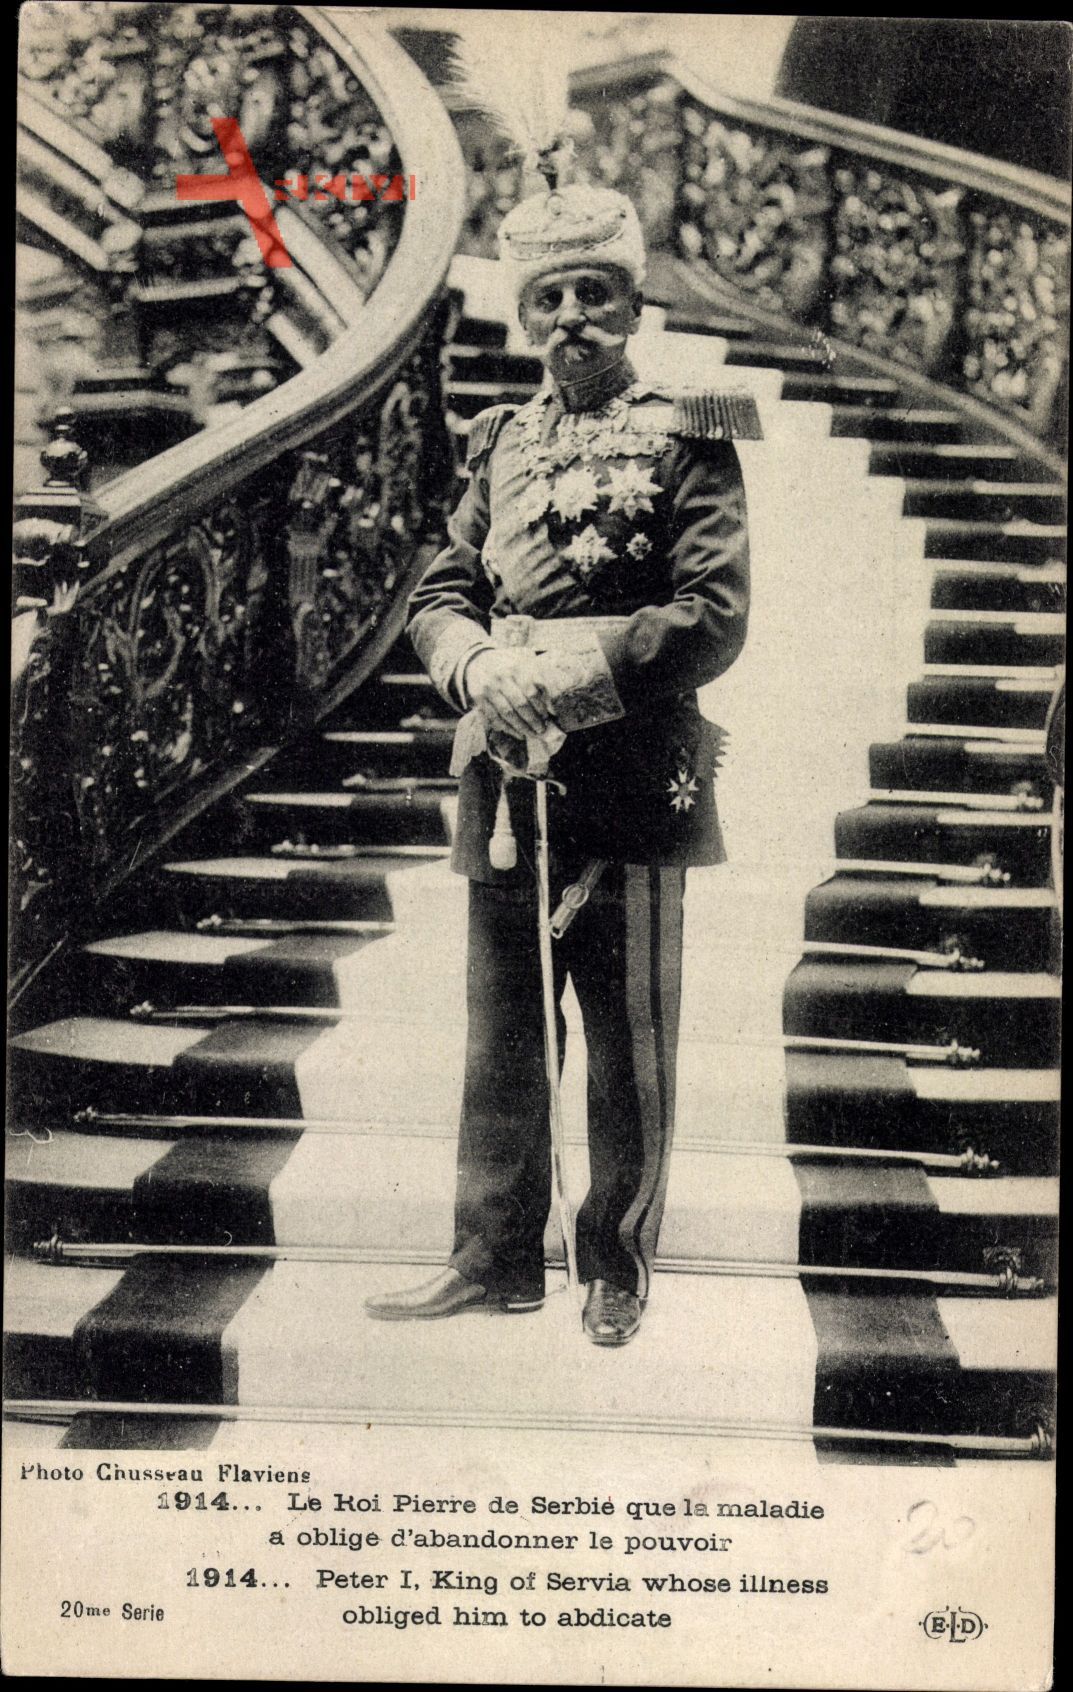 König Peter I. Karadjordjevic von Jugoslawien, Serbien